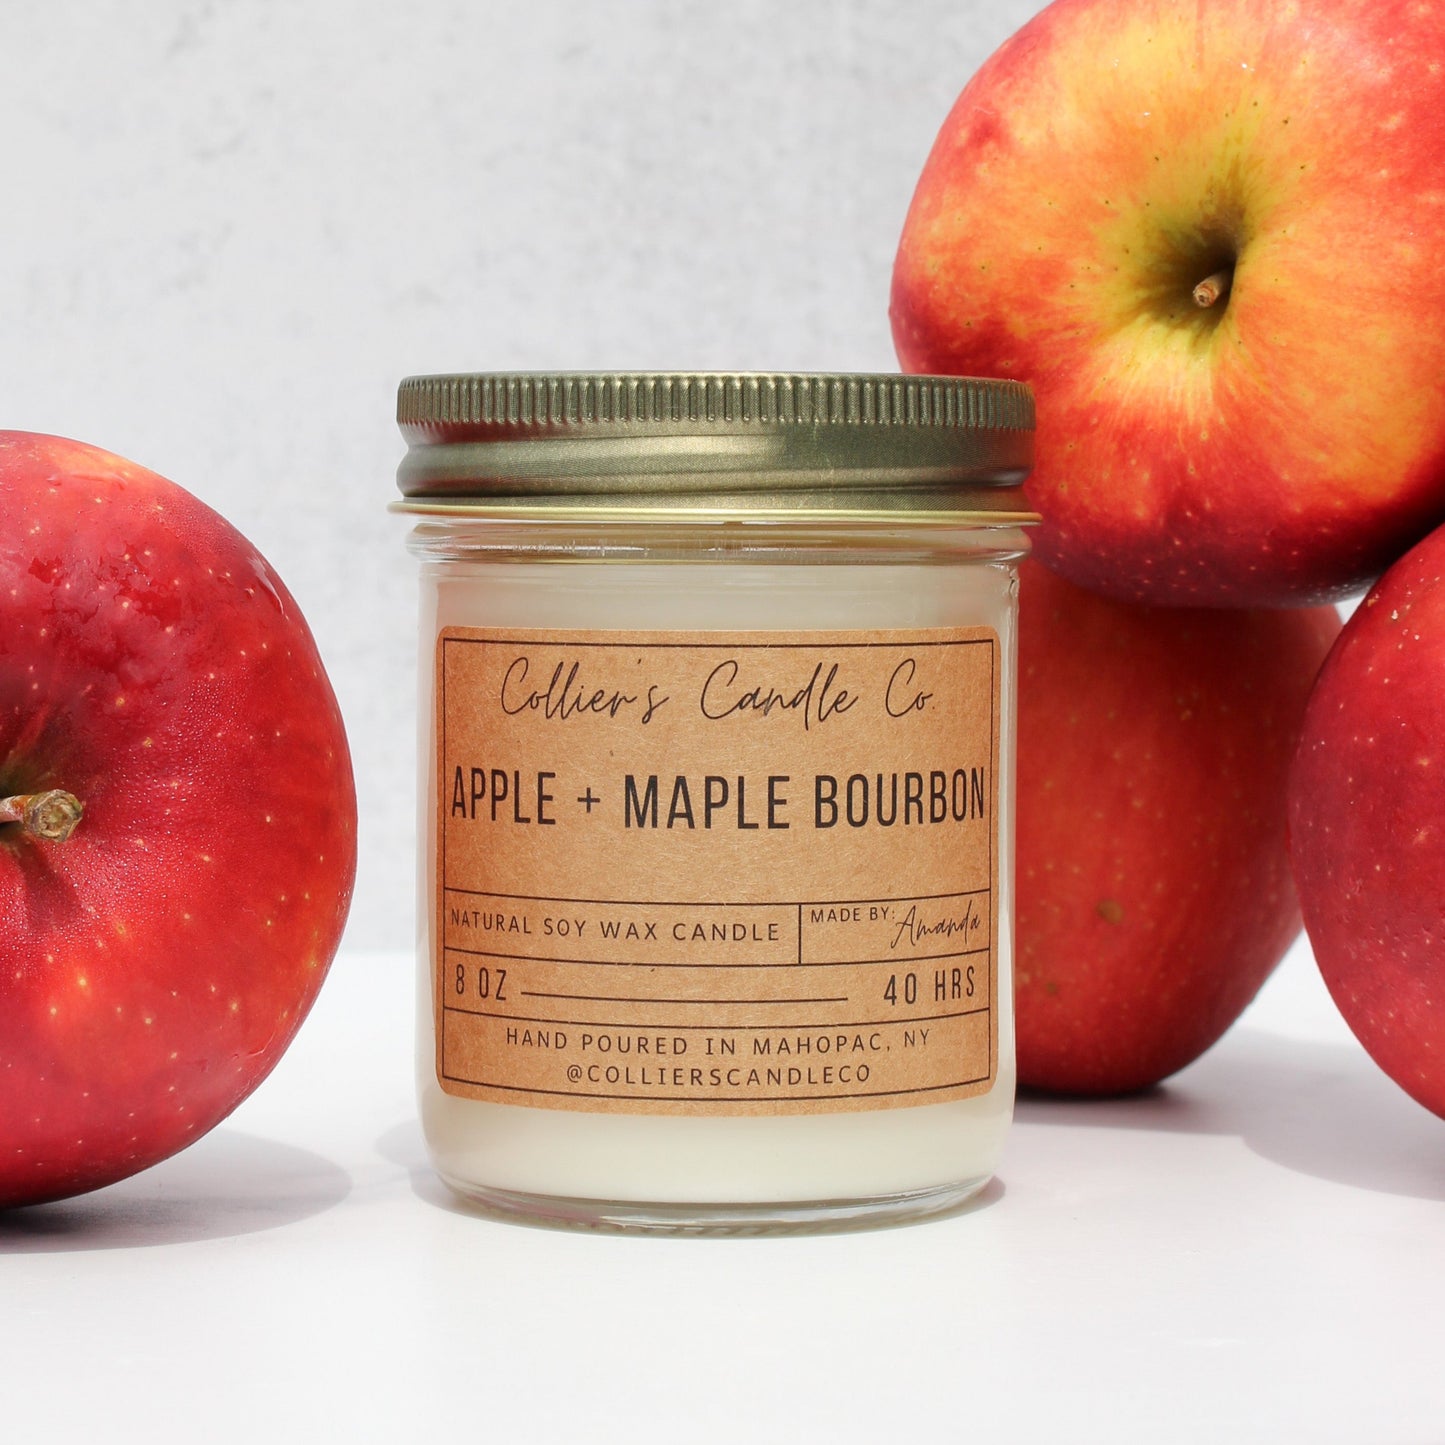 Apple + Maple Bourbon